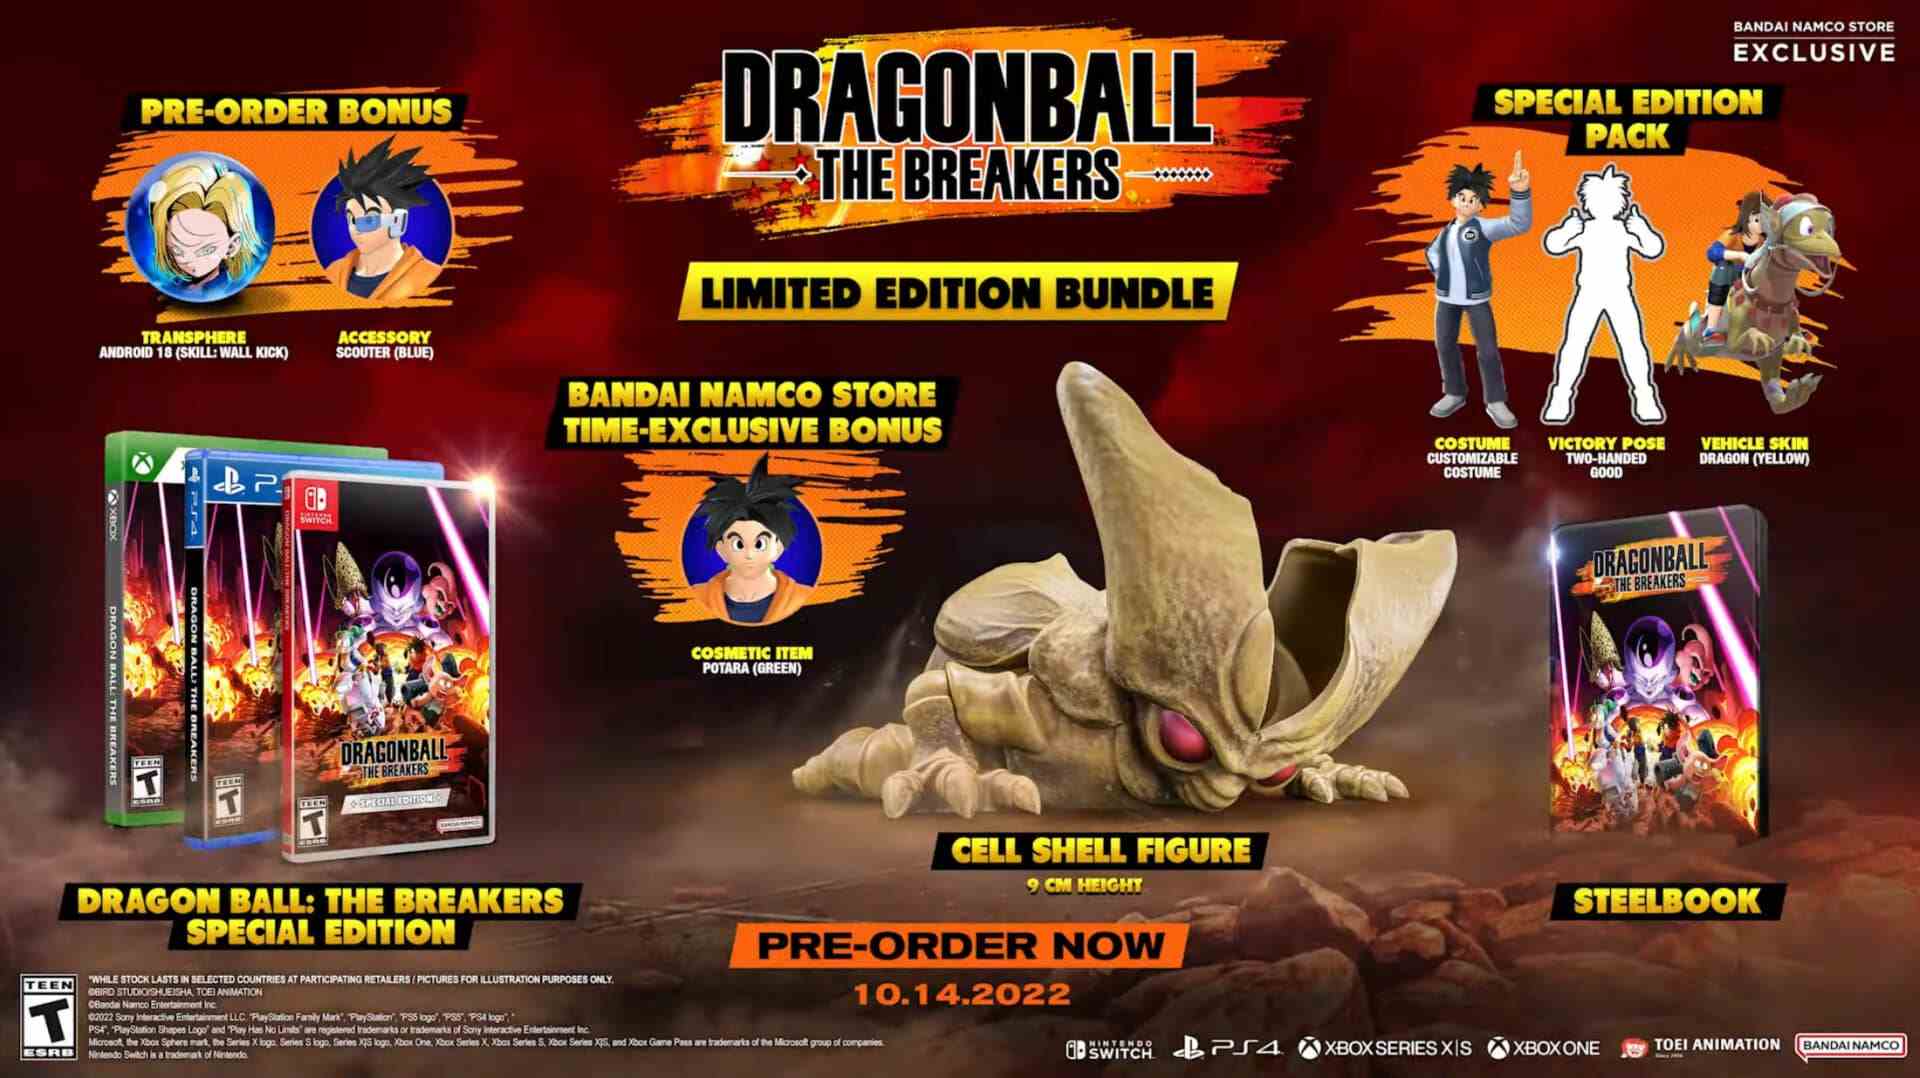 Dragon Ball: The Breakers Veröffentlichungsdatum Oktober 2022 Versionen Standard Digital Special Limited Collector Edition Bandai Namco Dimps Frieza enthüllen Trailer Namek